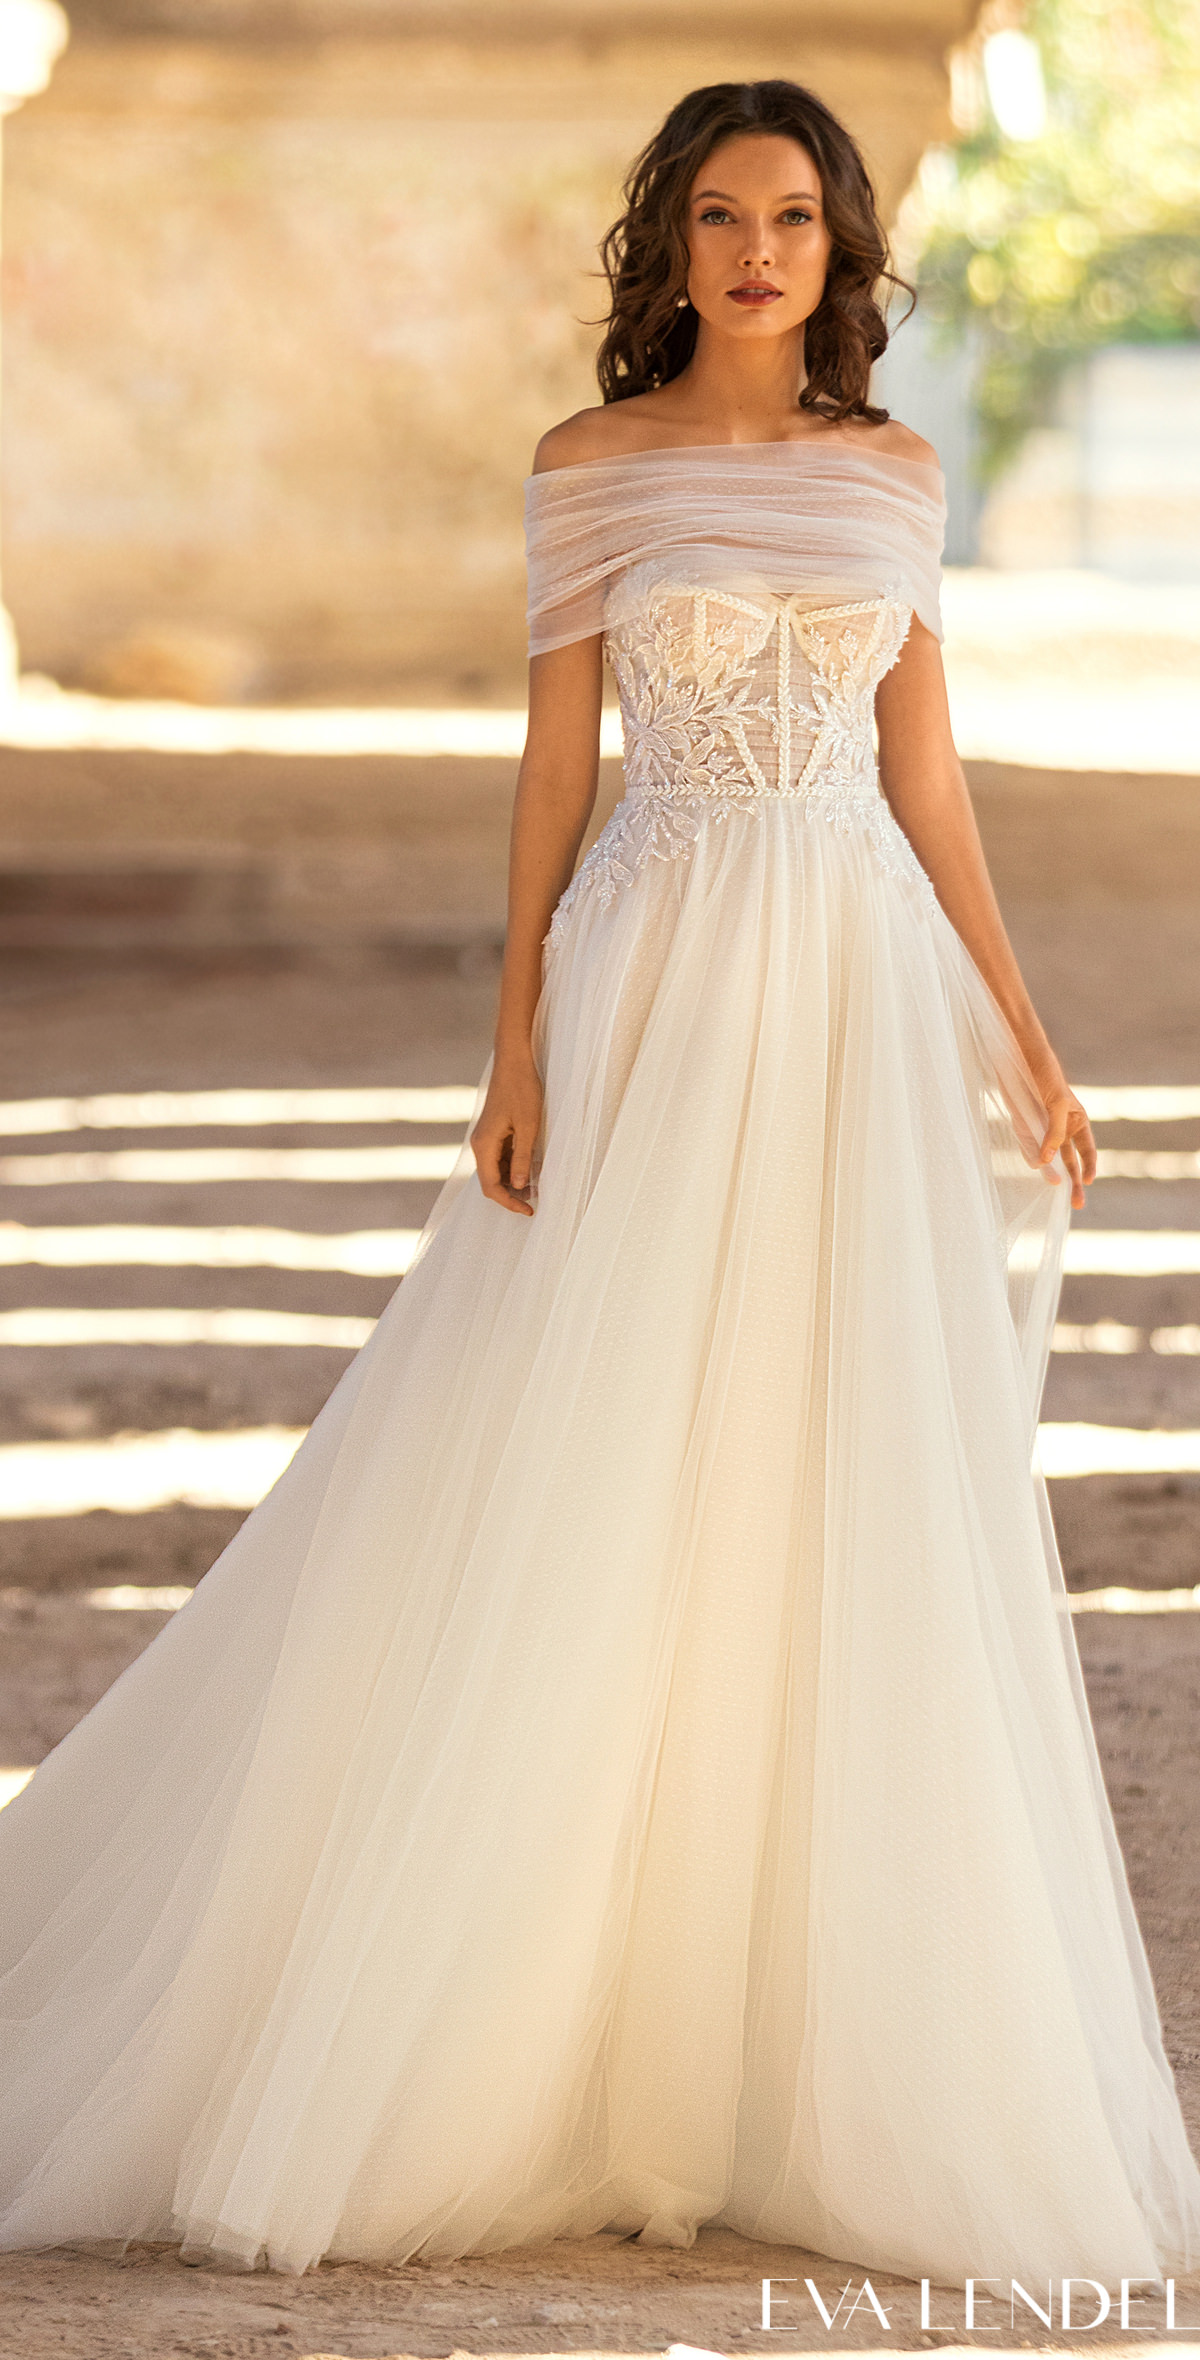 Eva Lendel Wedding Dresses 2021- Golden Hour Collection -Kollet